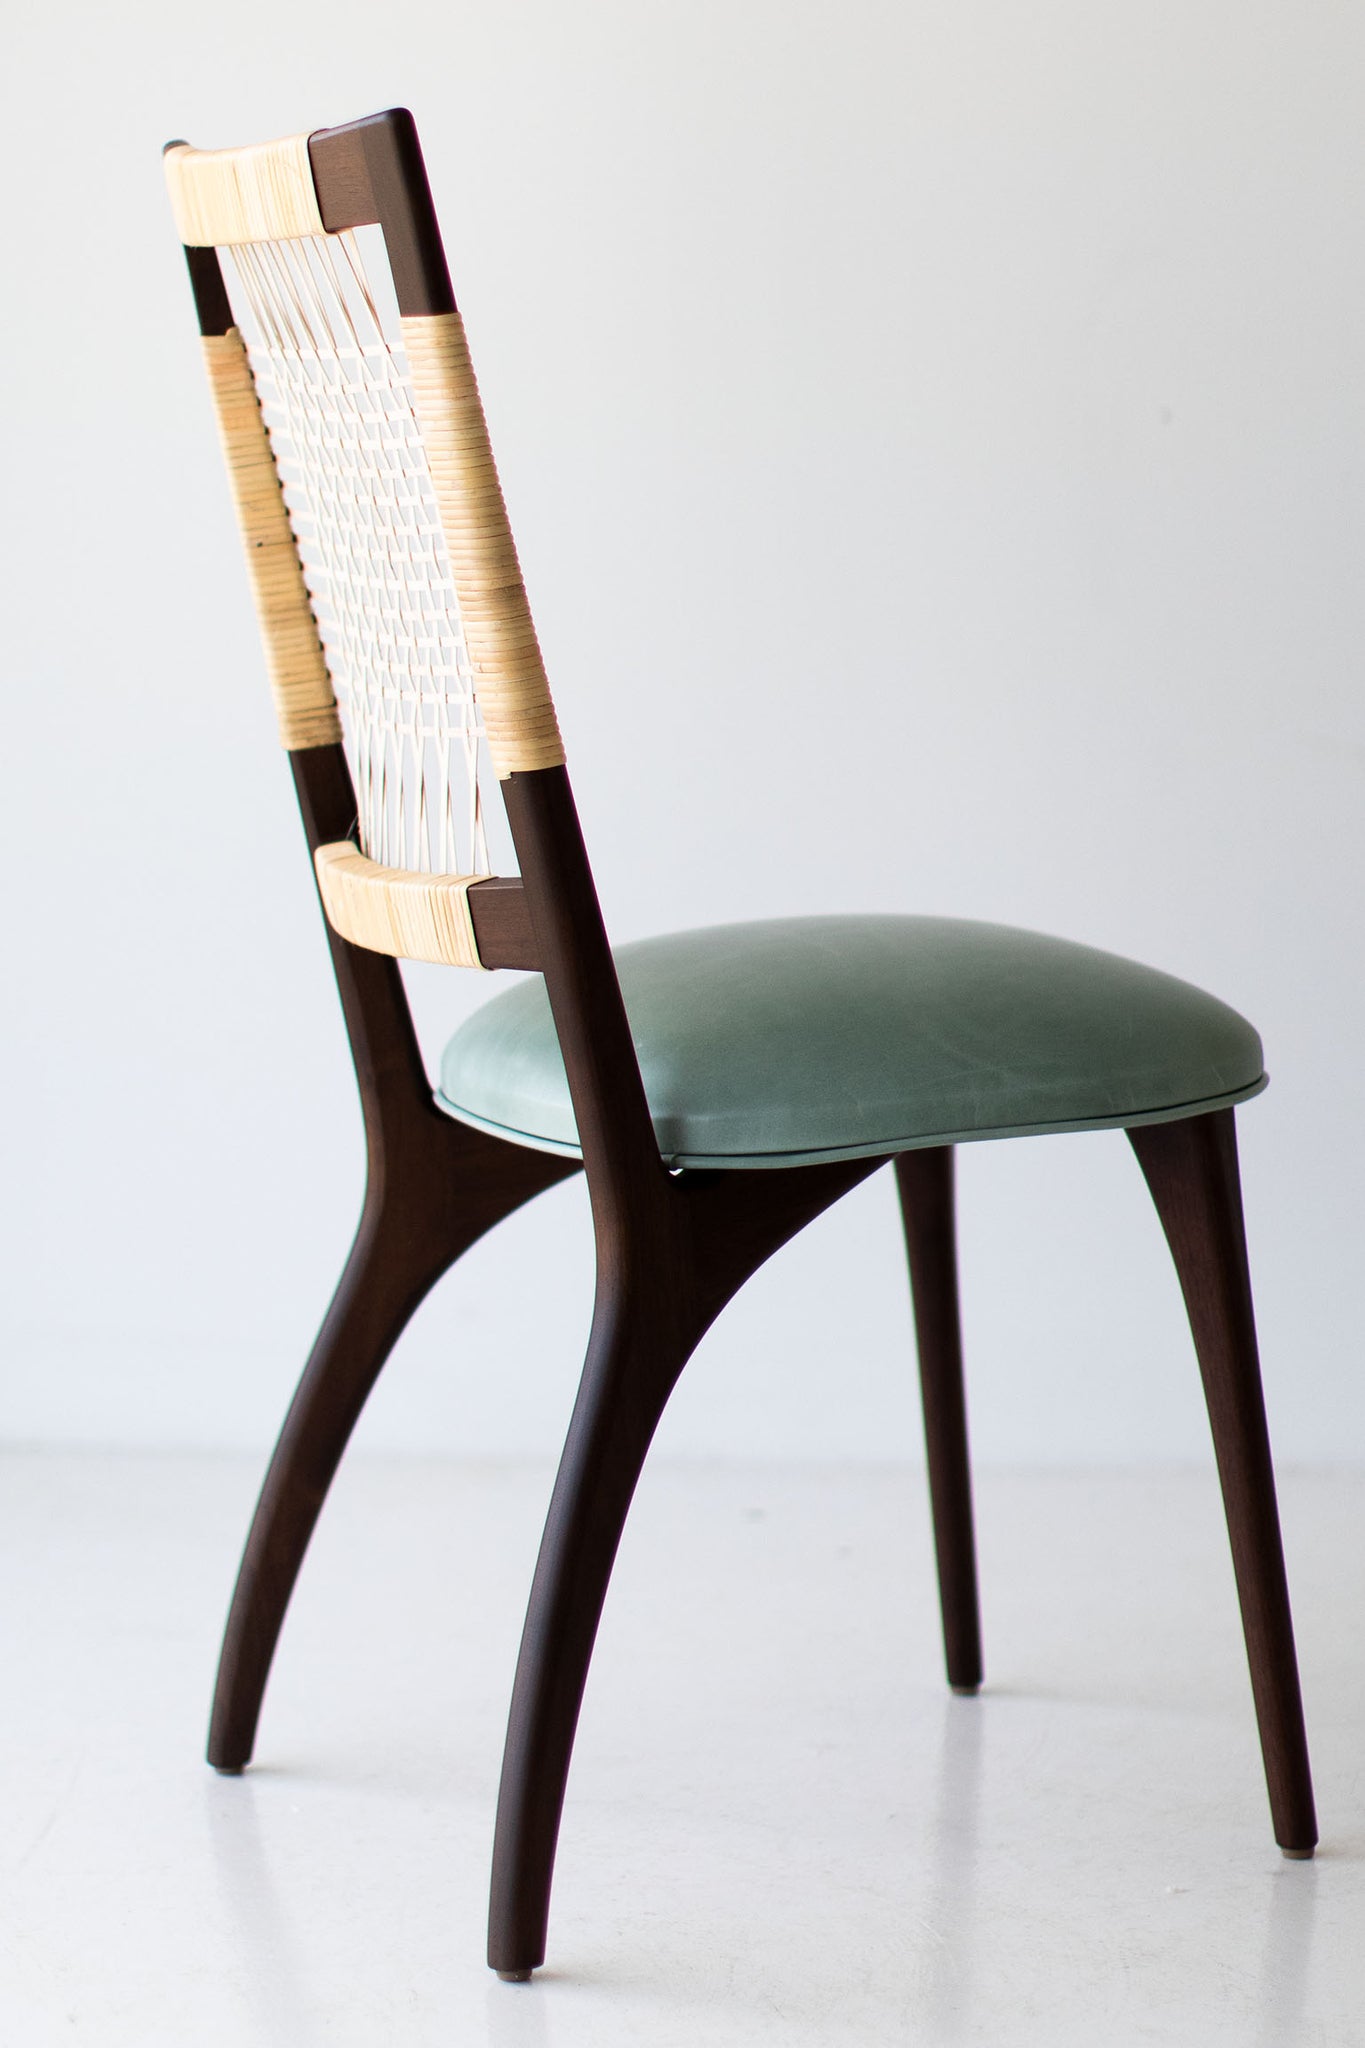 bonnie-modern-candeback-dining-chair-1905-06